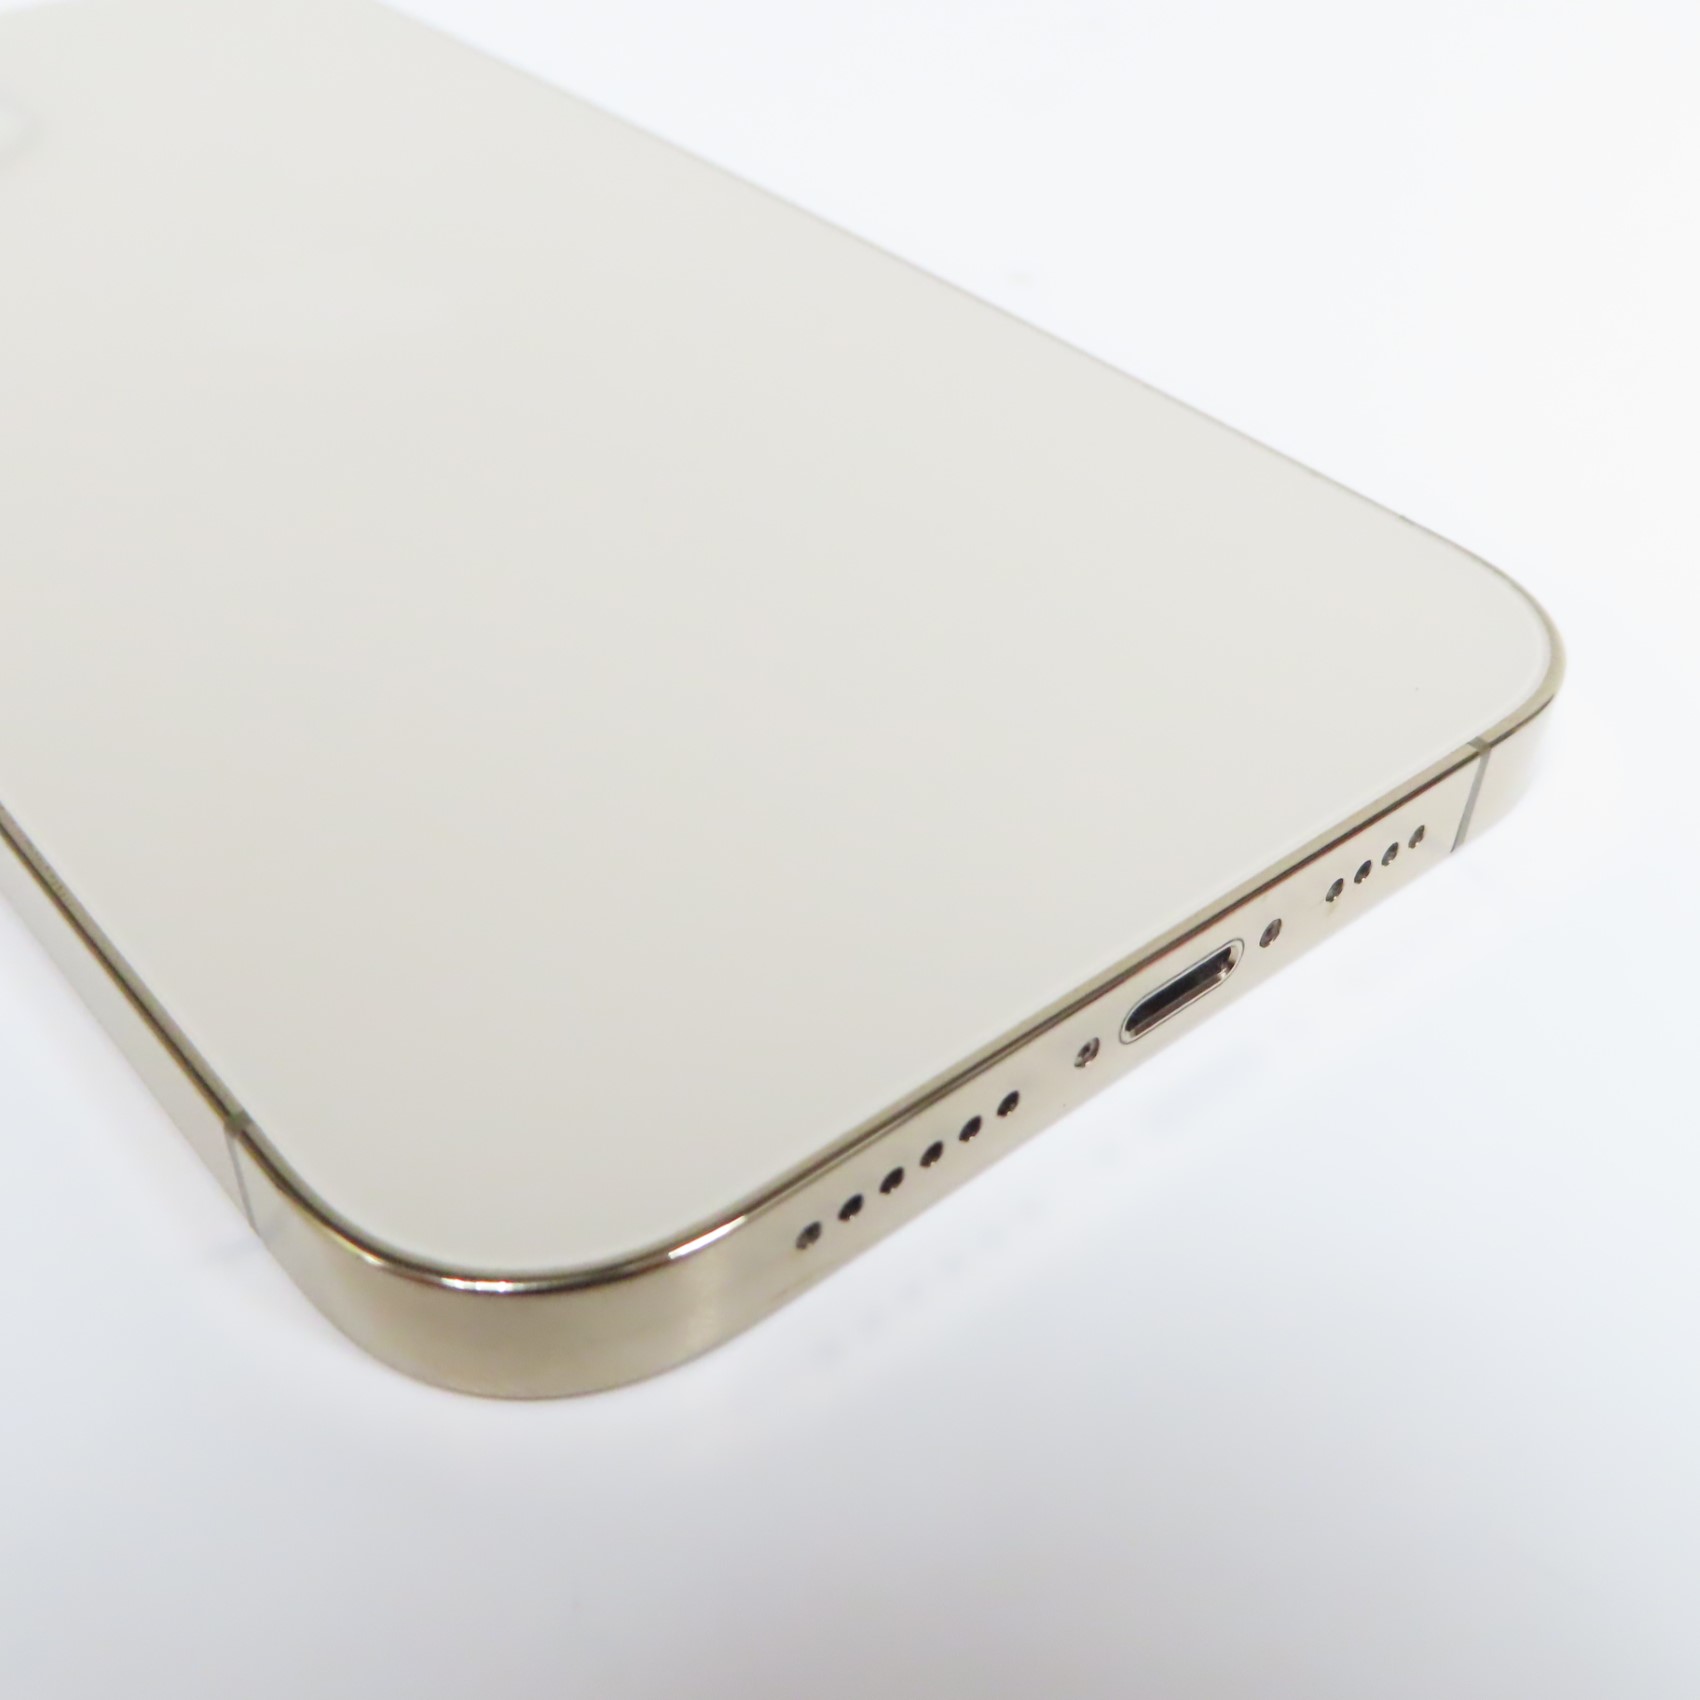 Verizon iPhone 12 Pro 256GB Silver 